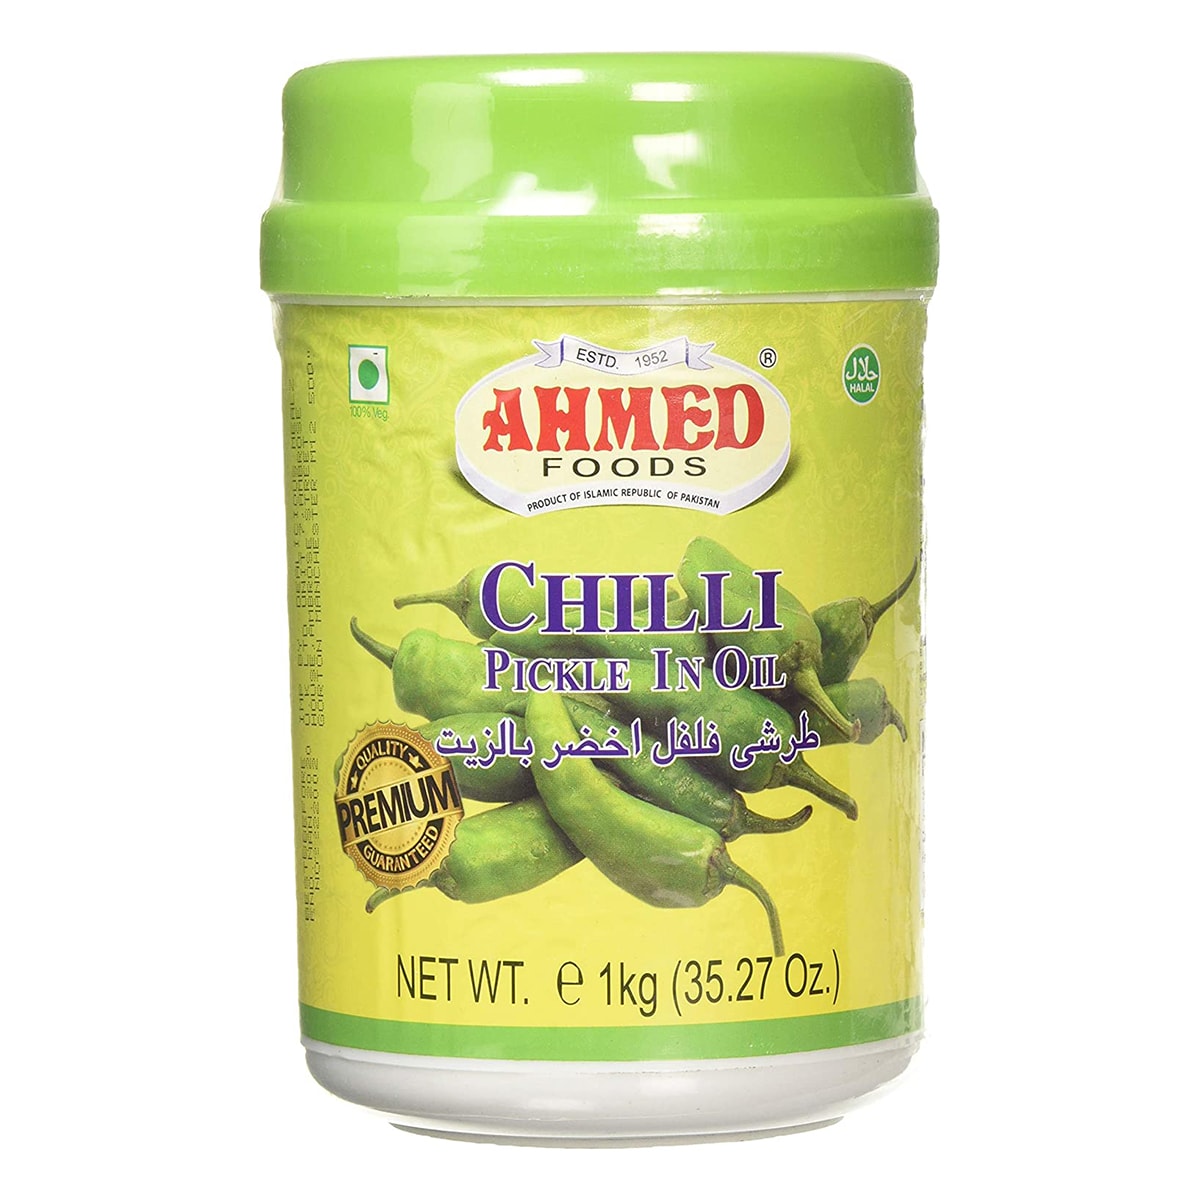 Buy Ahmed Foods Chilli Pickle in Oil - 1 kg